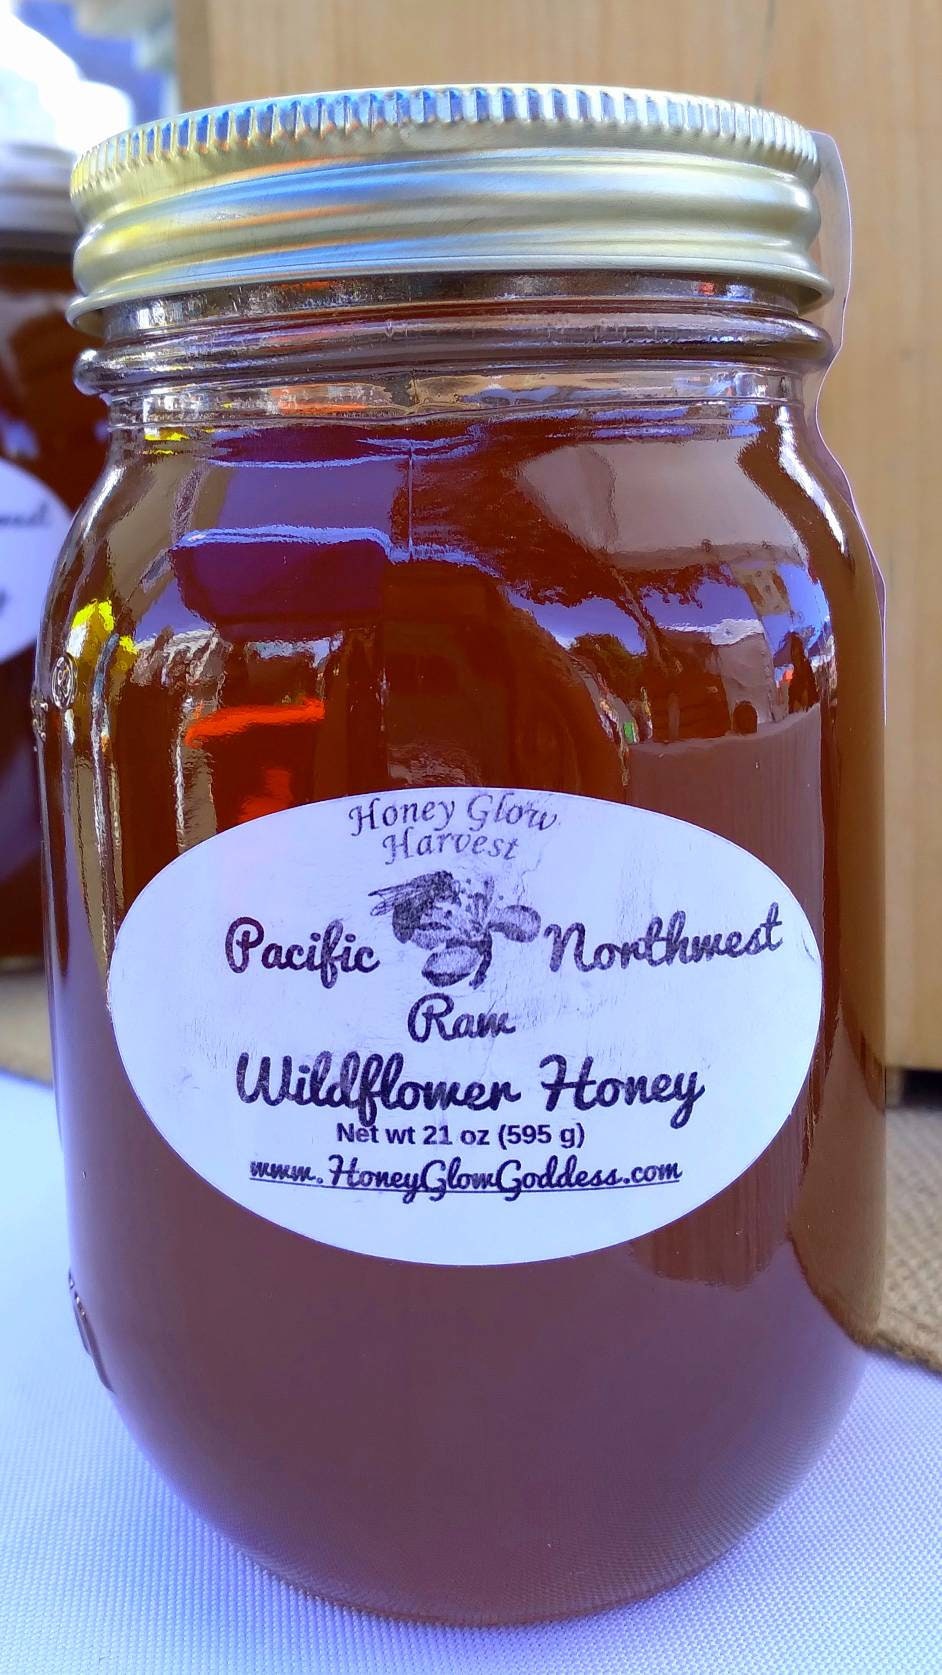 Hometown Honey, Glass Pint Jar w/Comb, 21oz. - Nuts 'n Berries